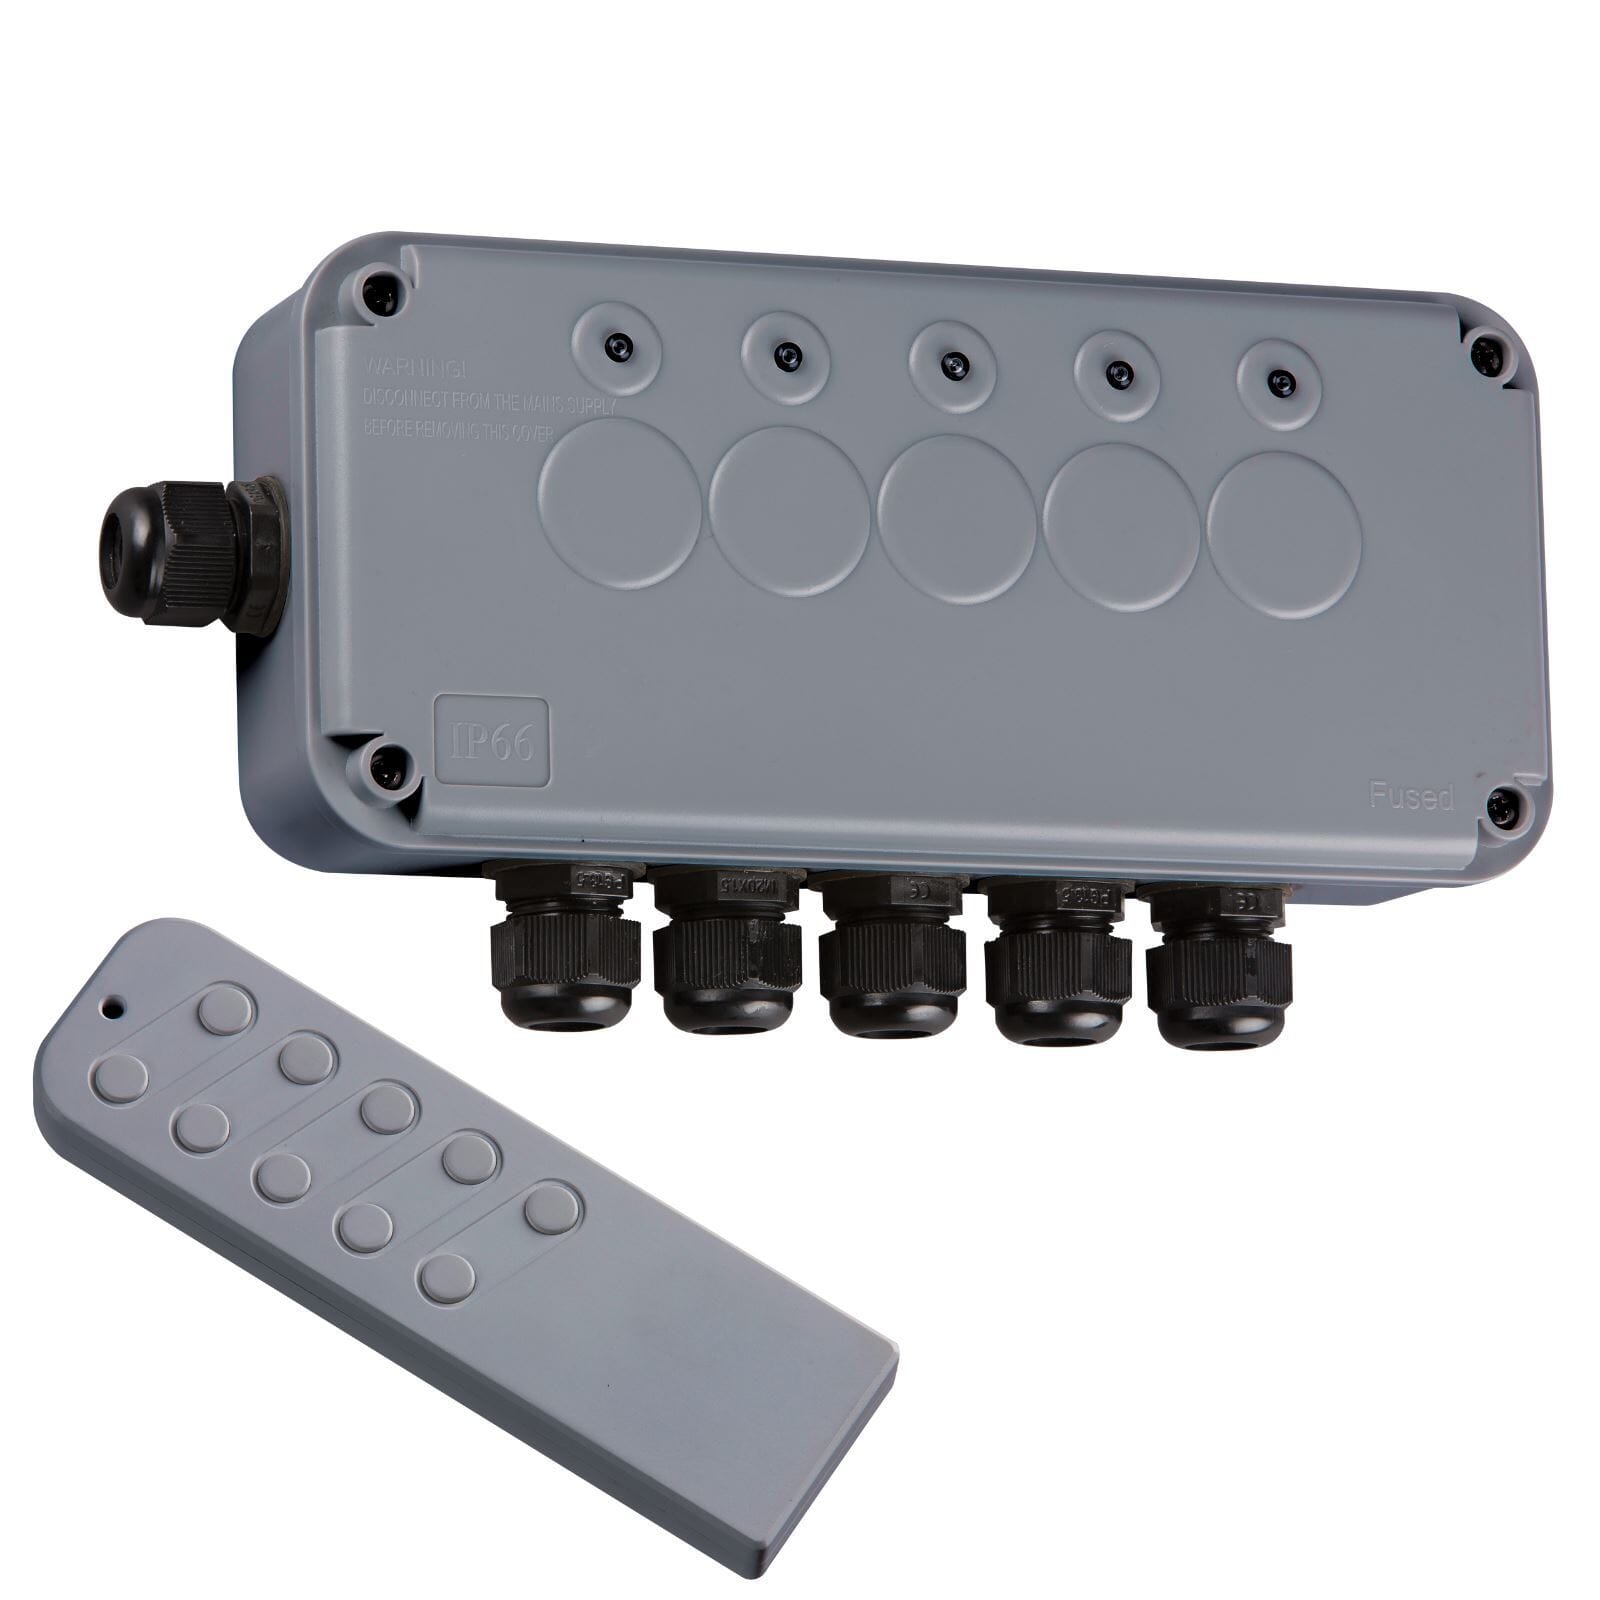 Weatherproof Outdoor Remote Control Light Switch Box - 5 Gang Accessories Knightsbridge 